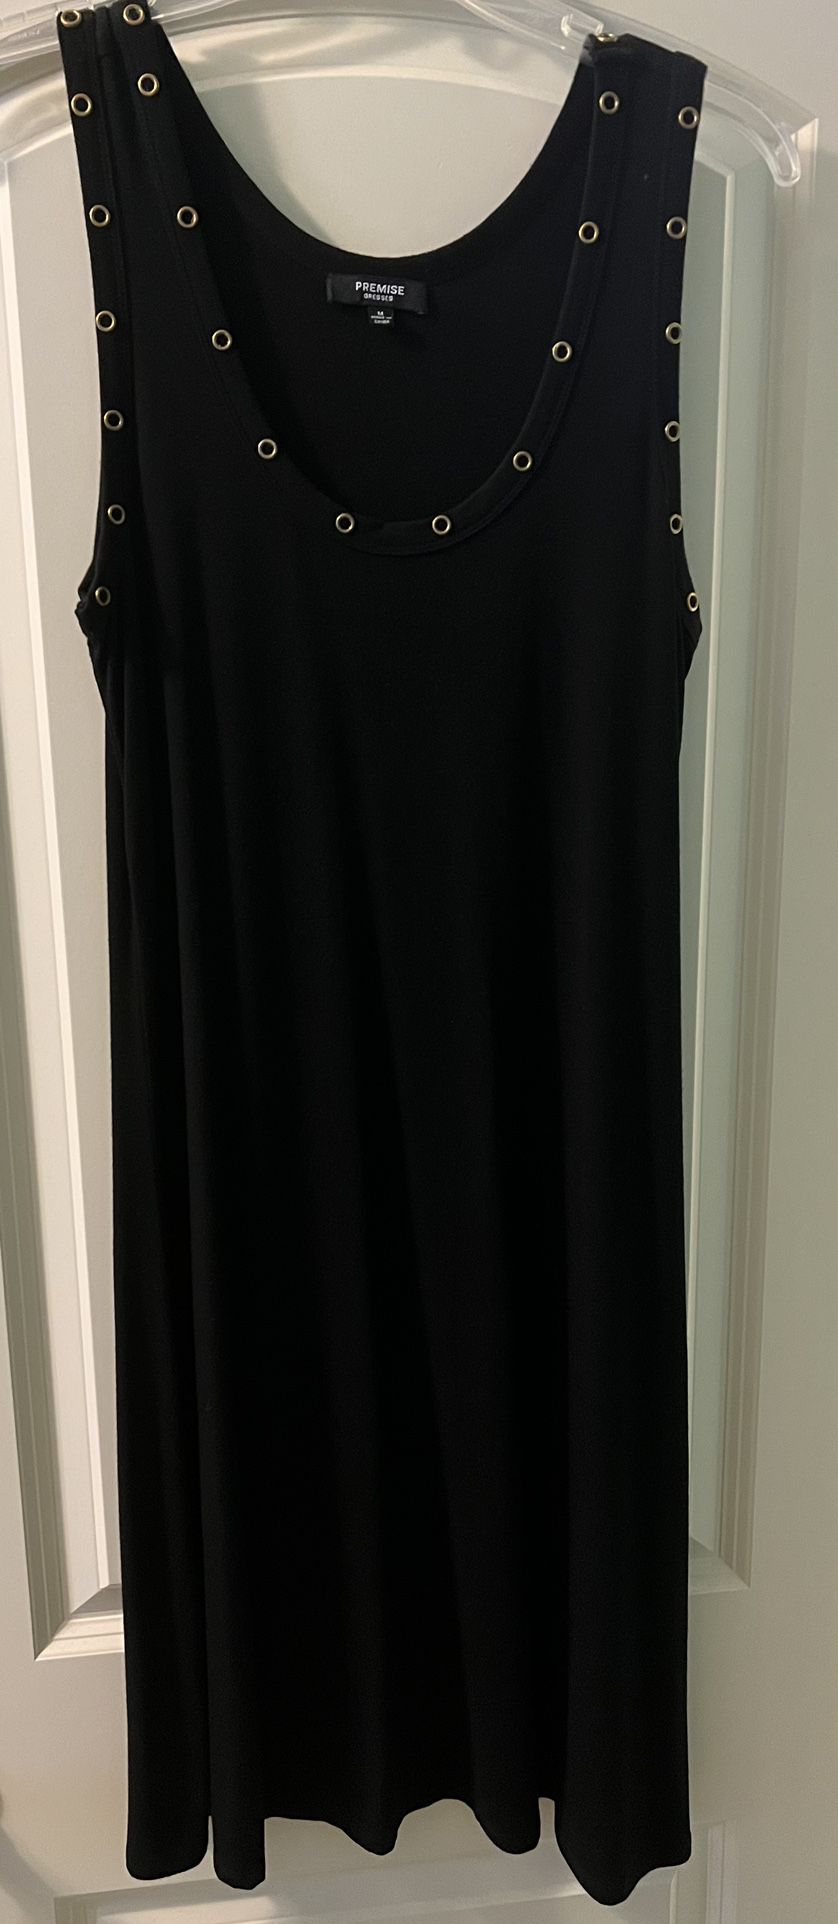 Ladies Black Dress Size Medium 